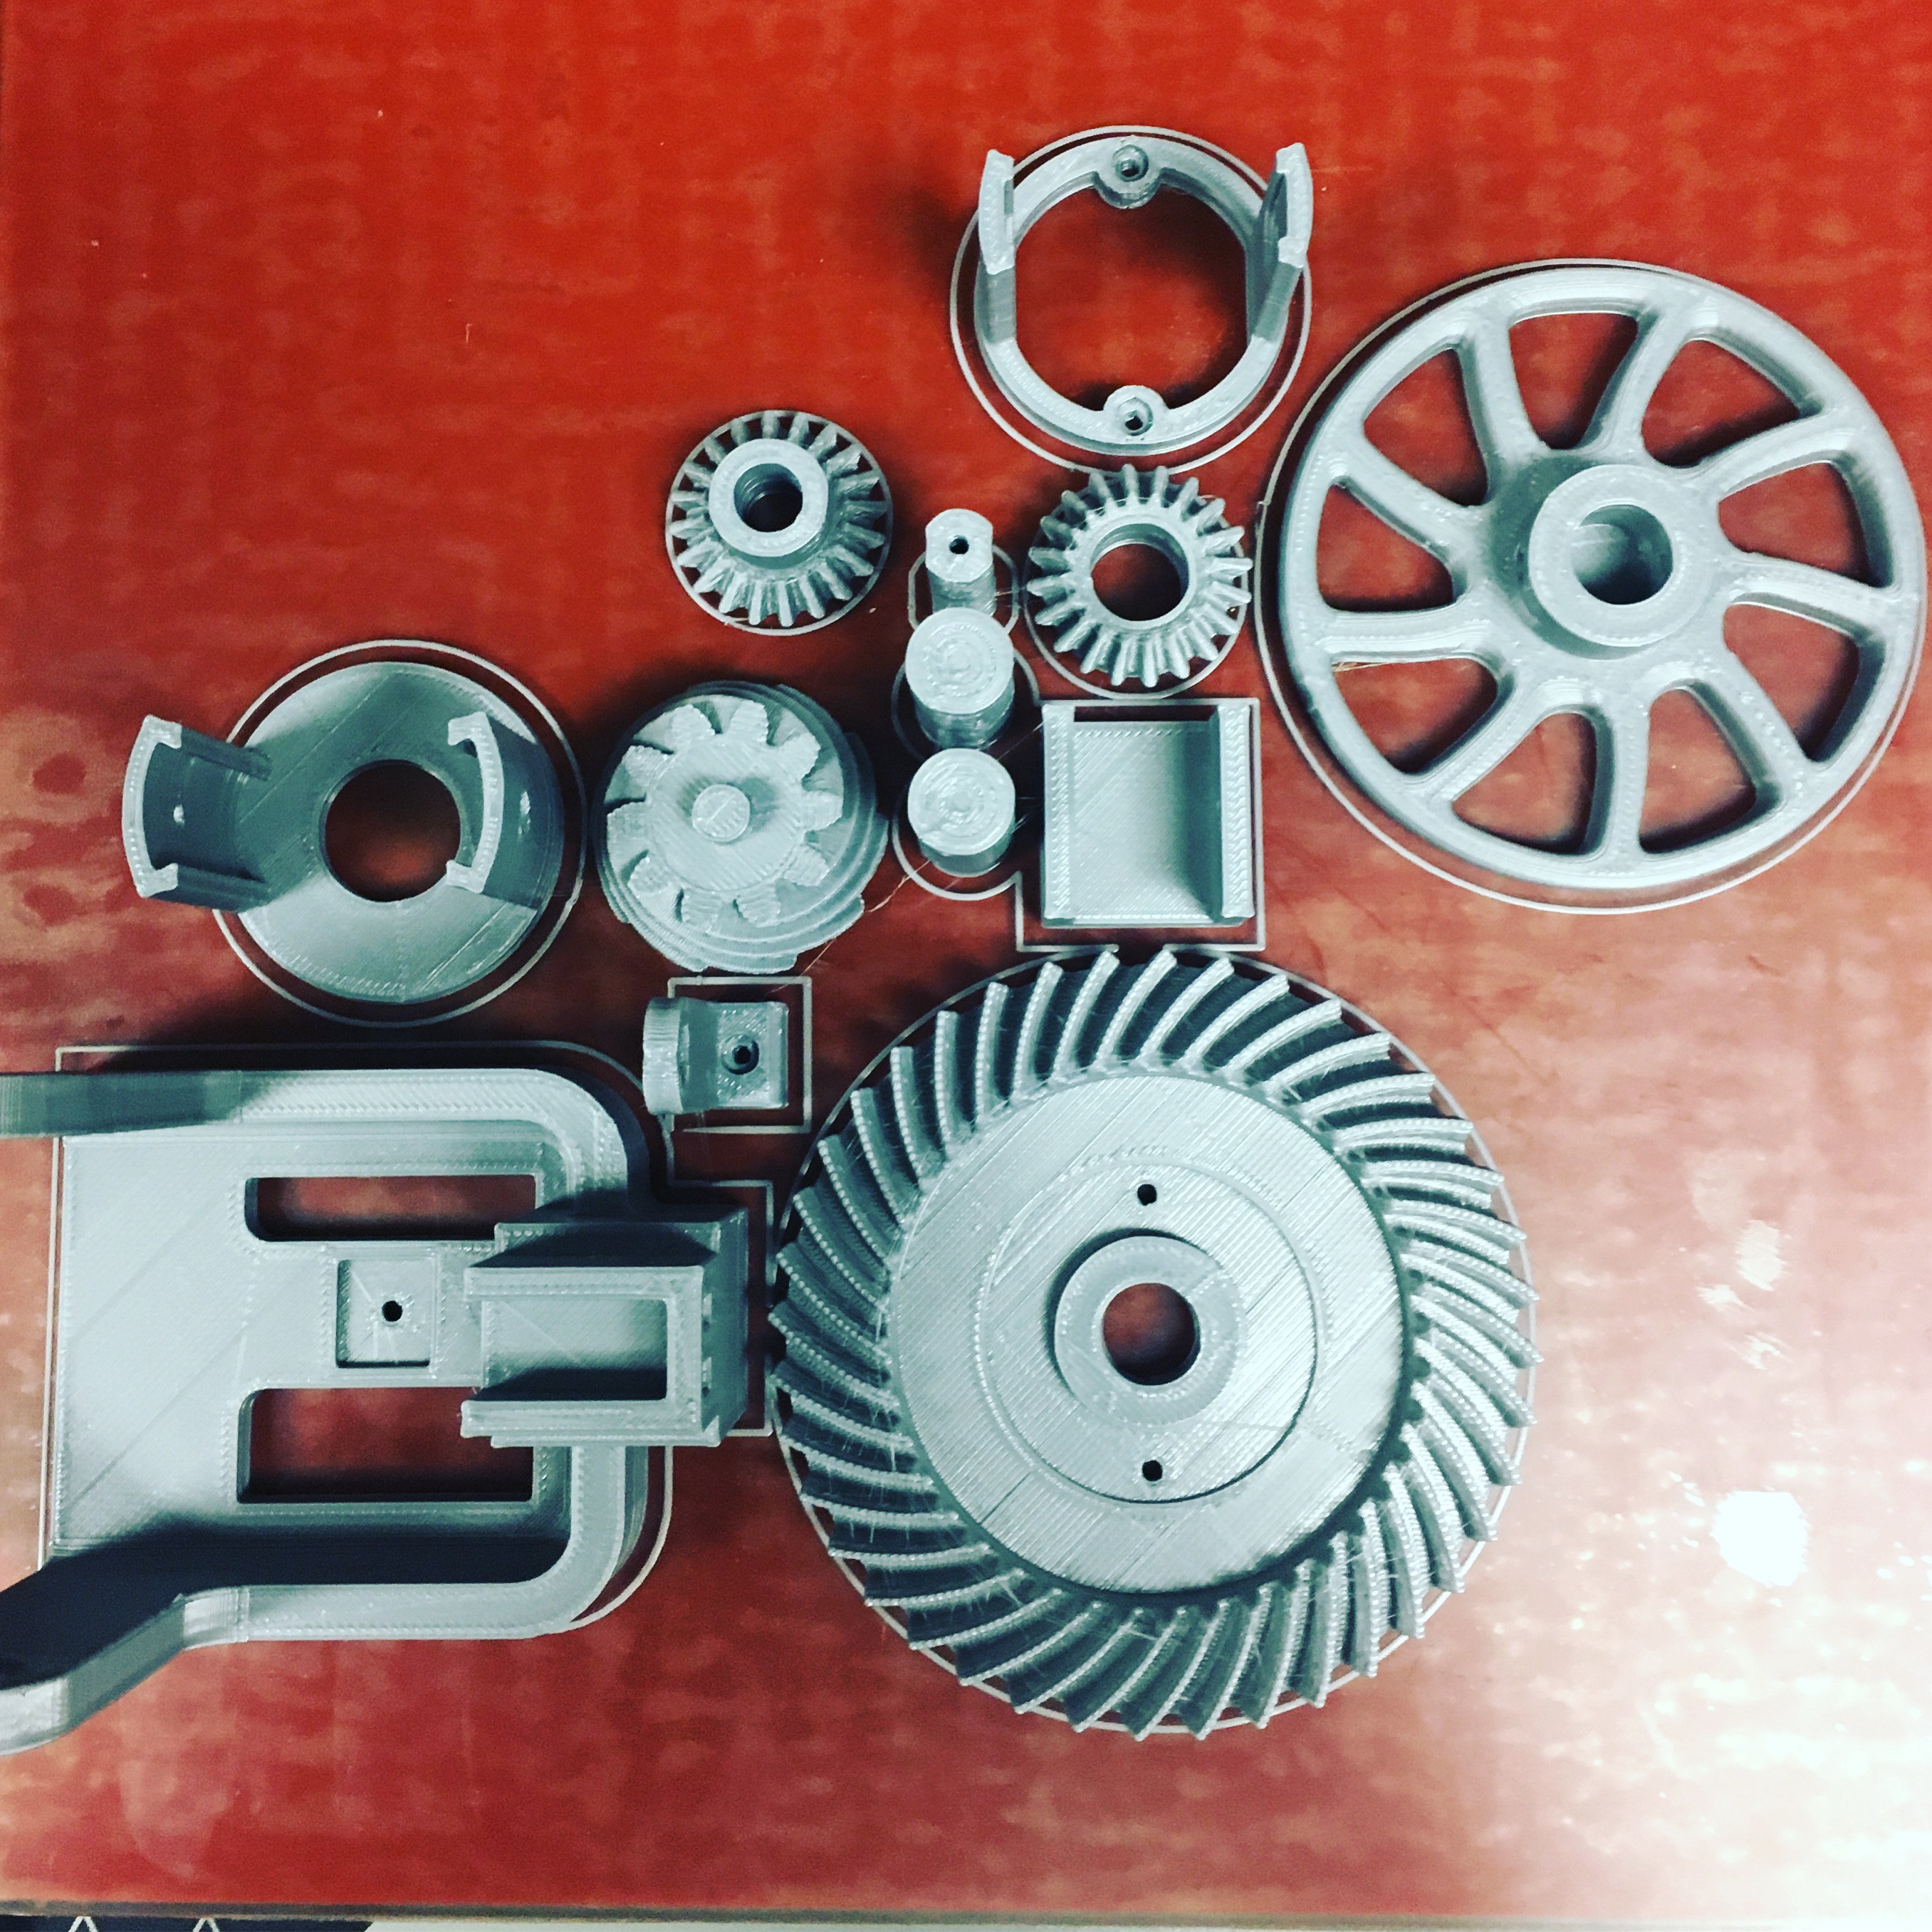 Gears and Motor - Lulzbot Printer